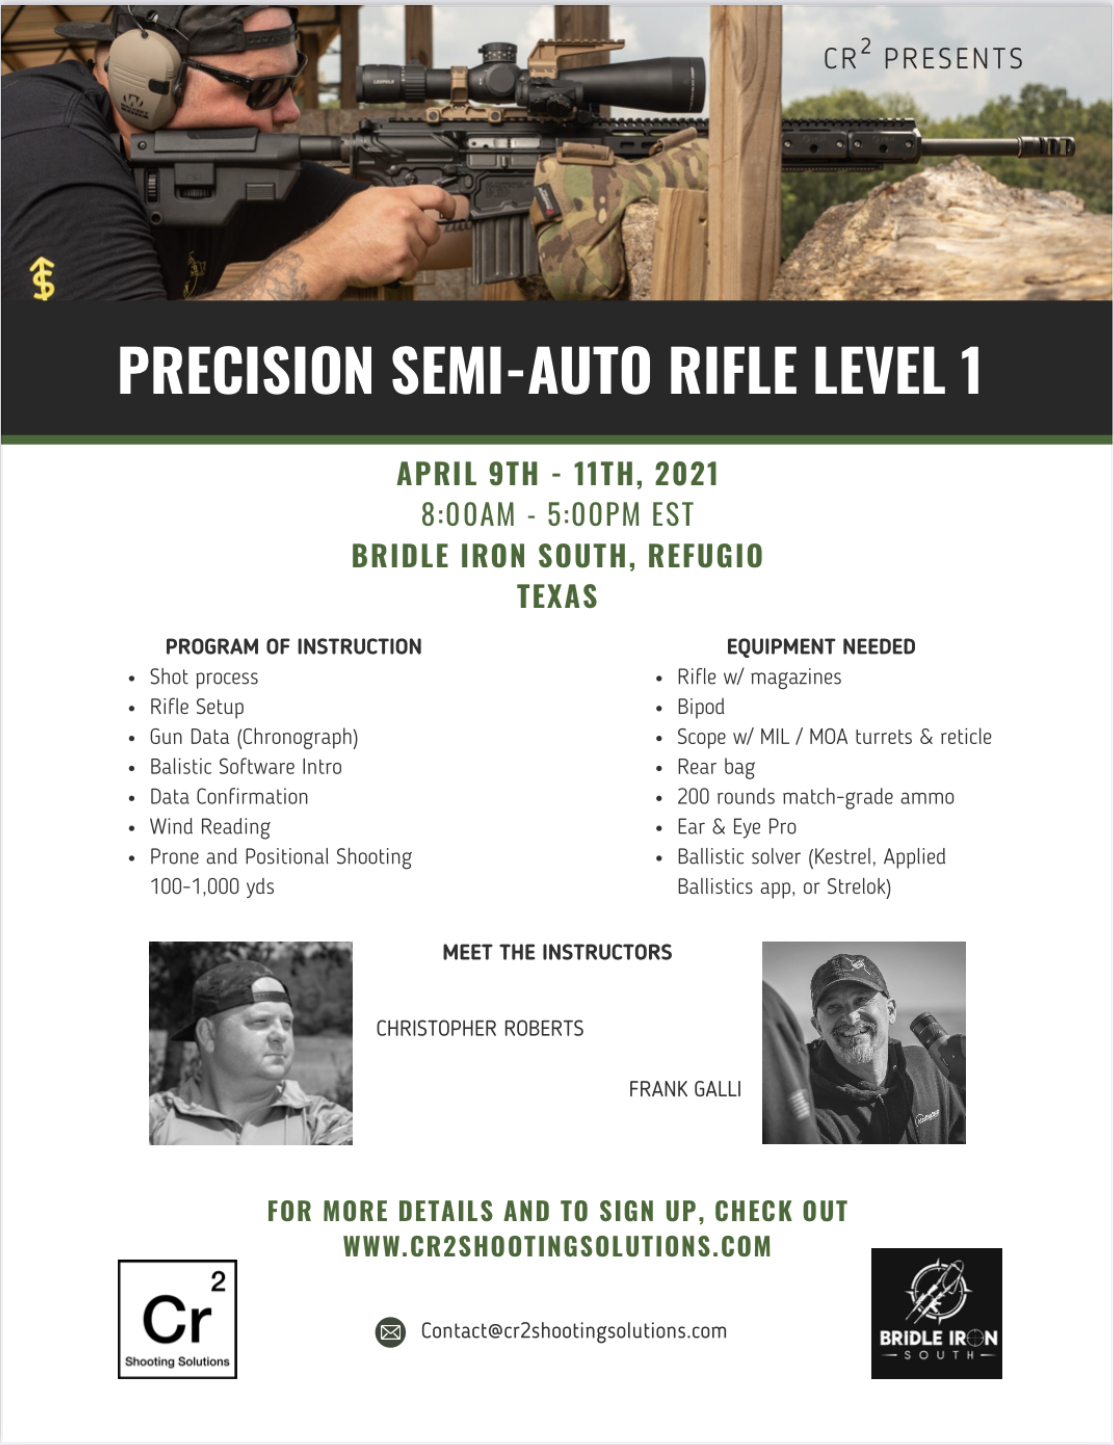 Training Courses - CR2 and Frank Galli present PR1, Texas | Sniper's ...